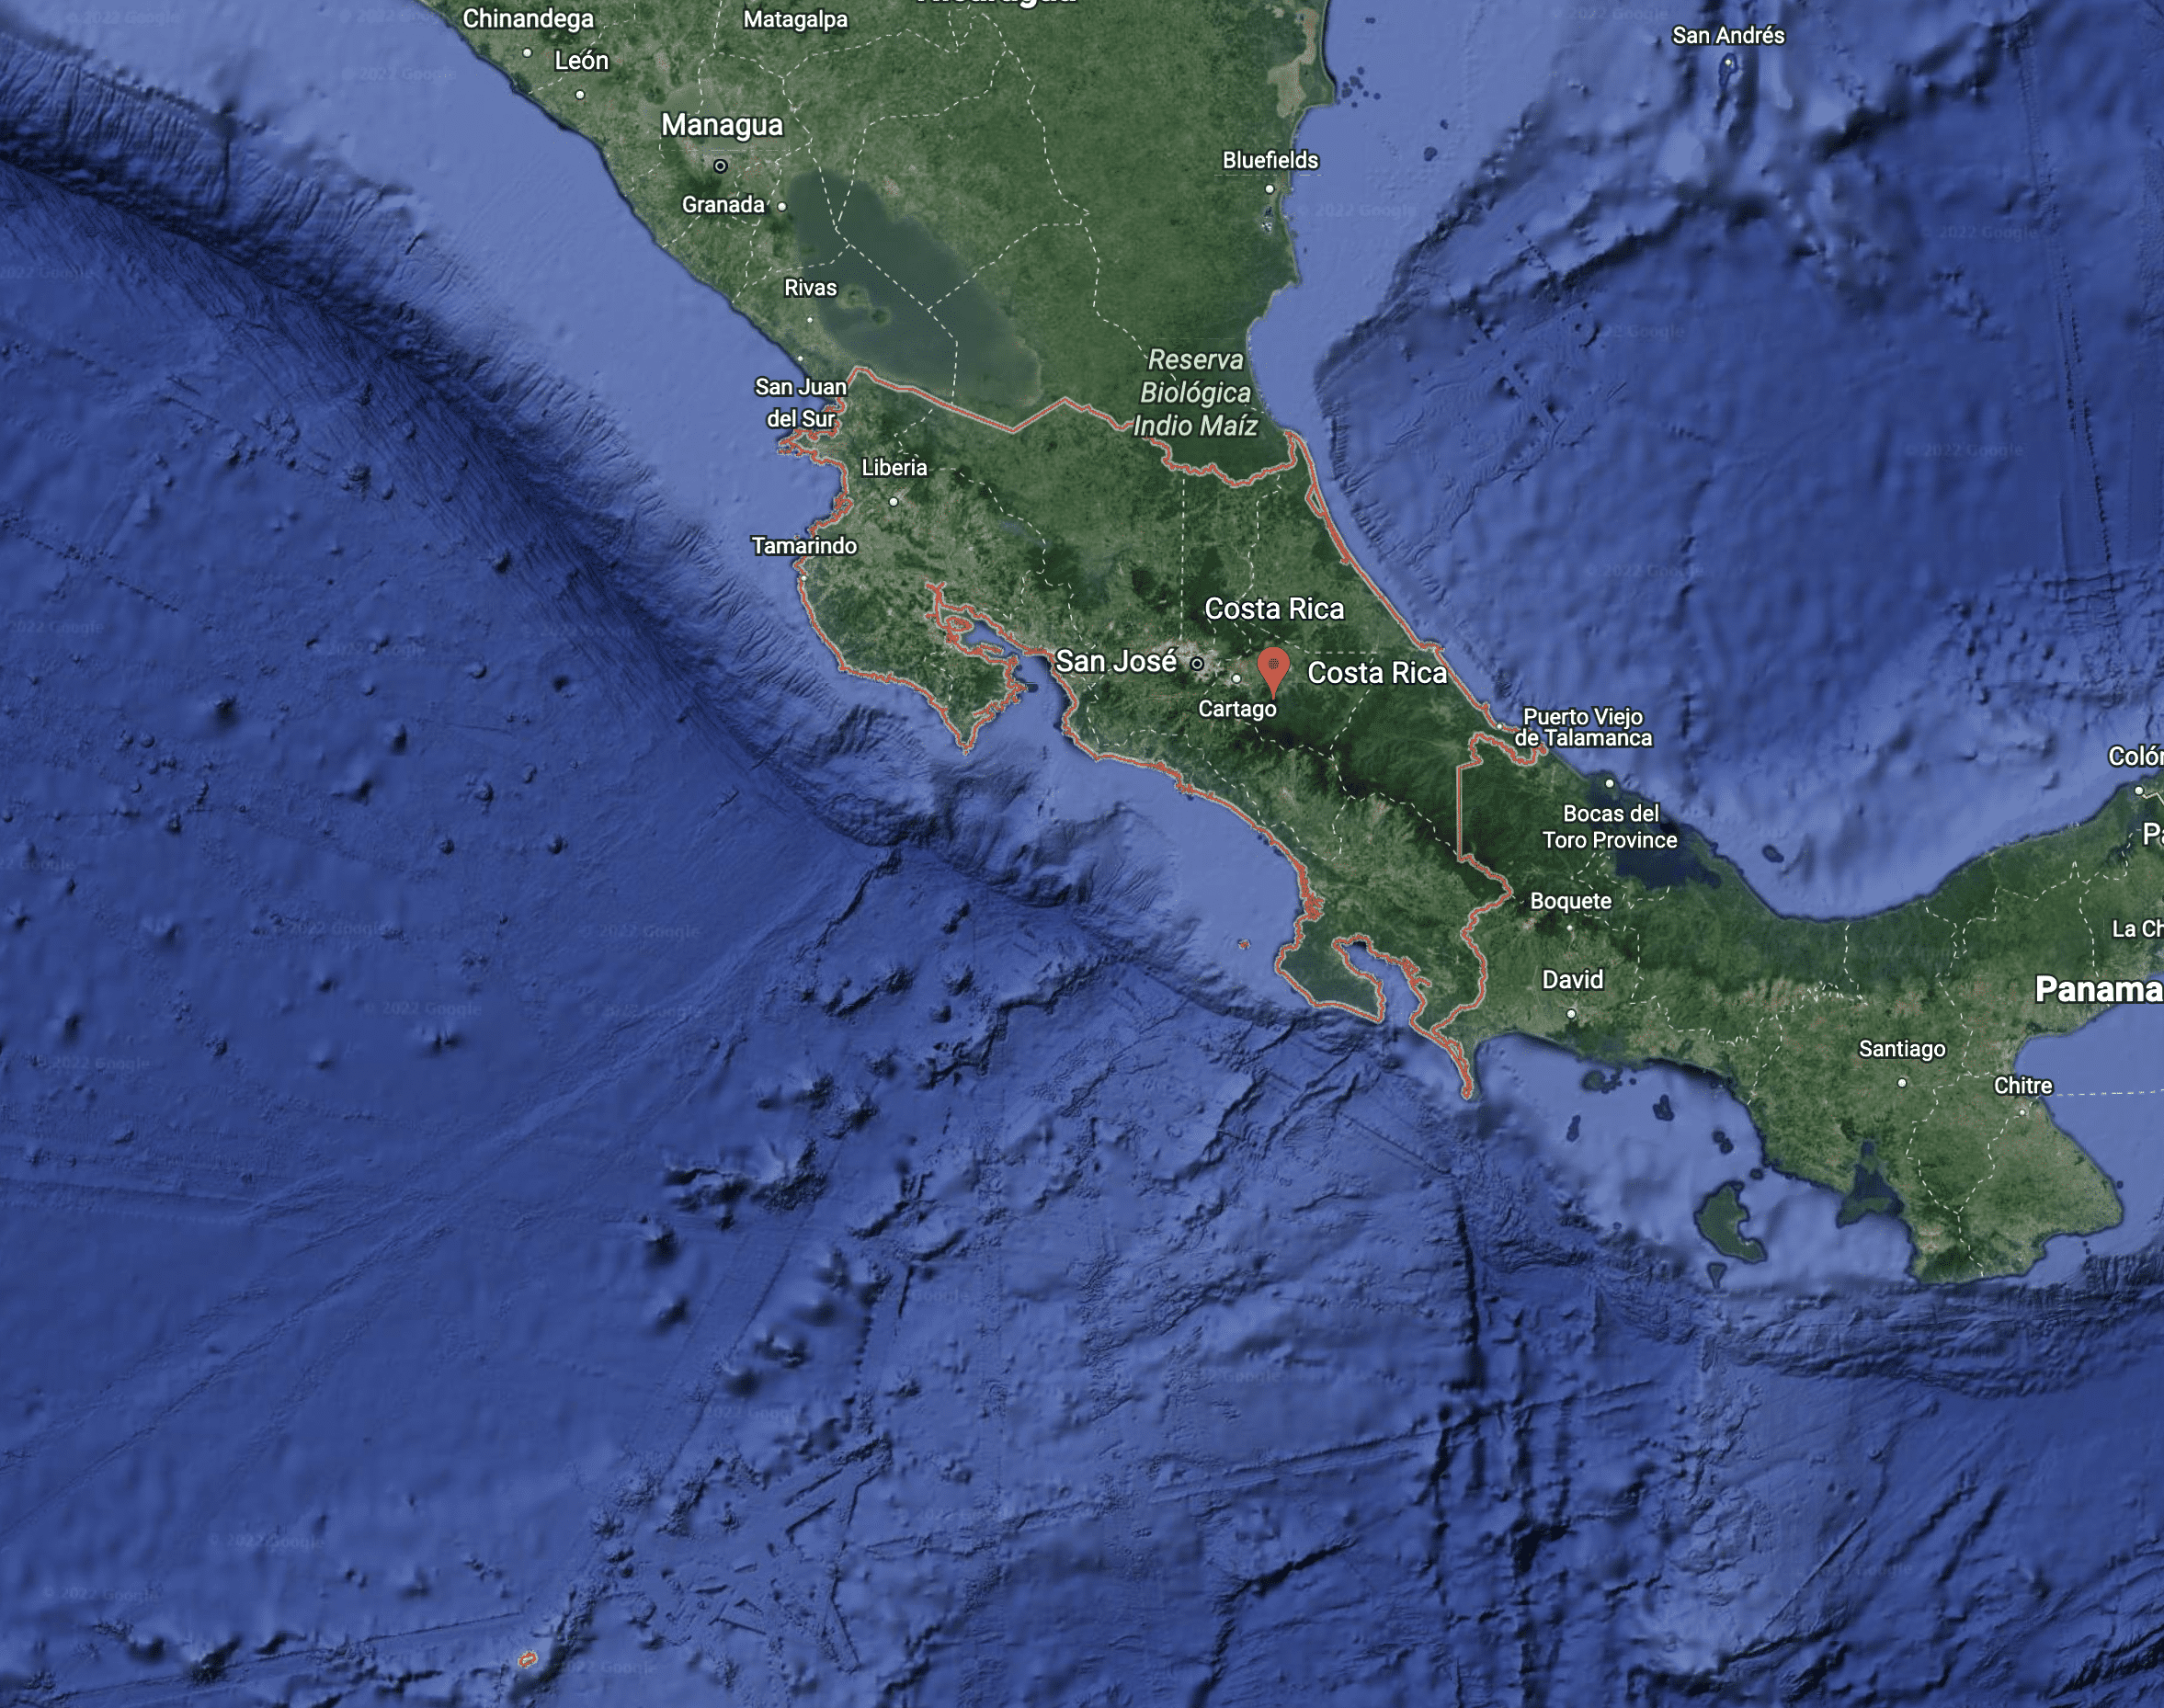 Google Earth Satellite Image of Costa Rica